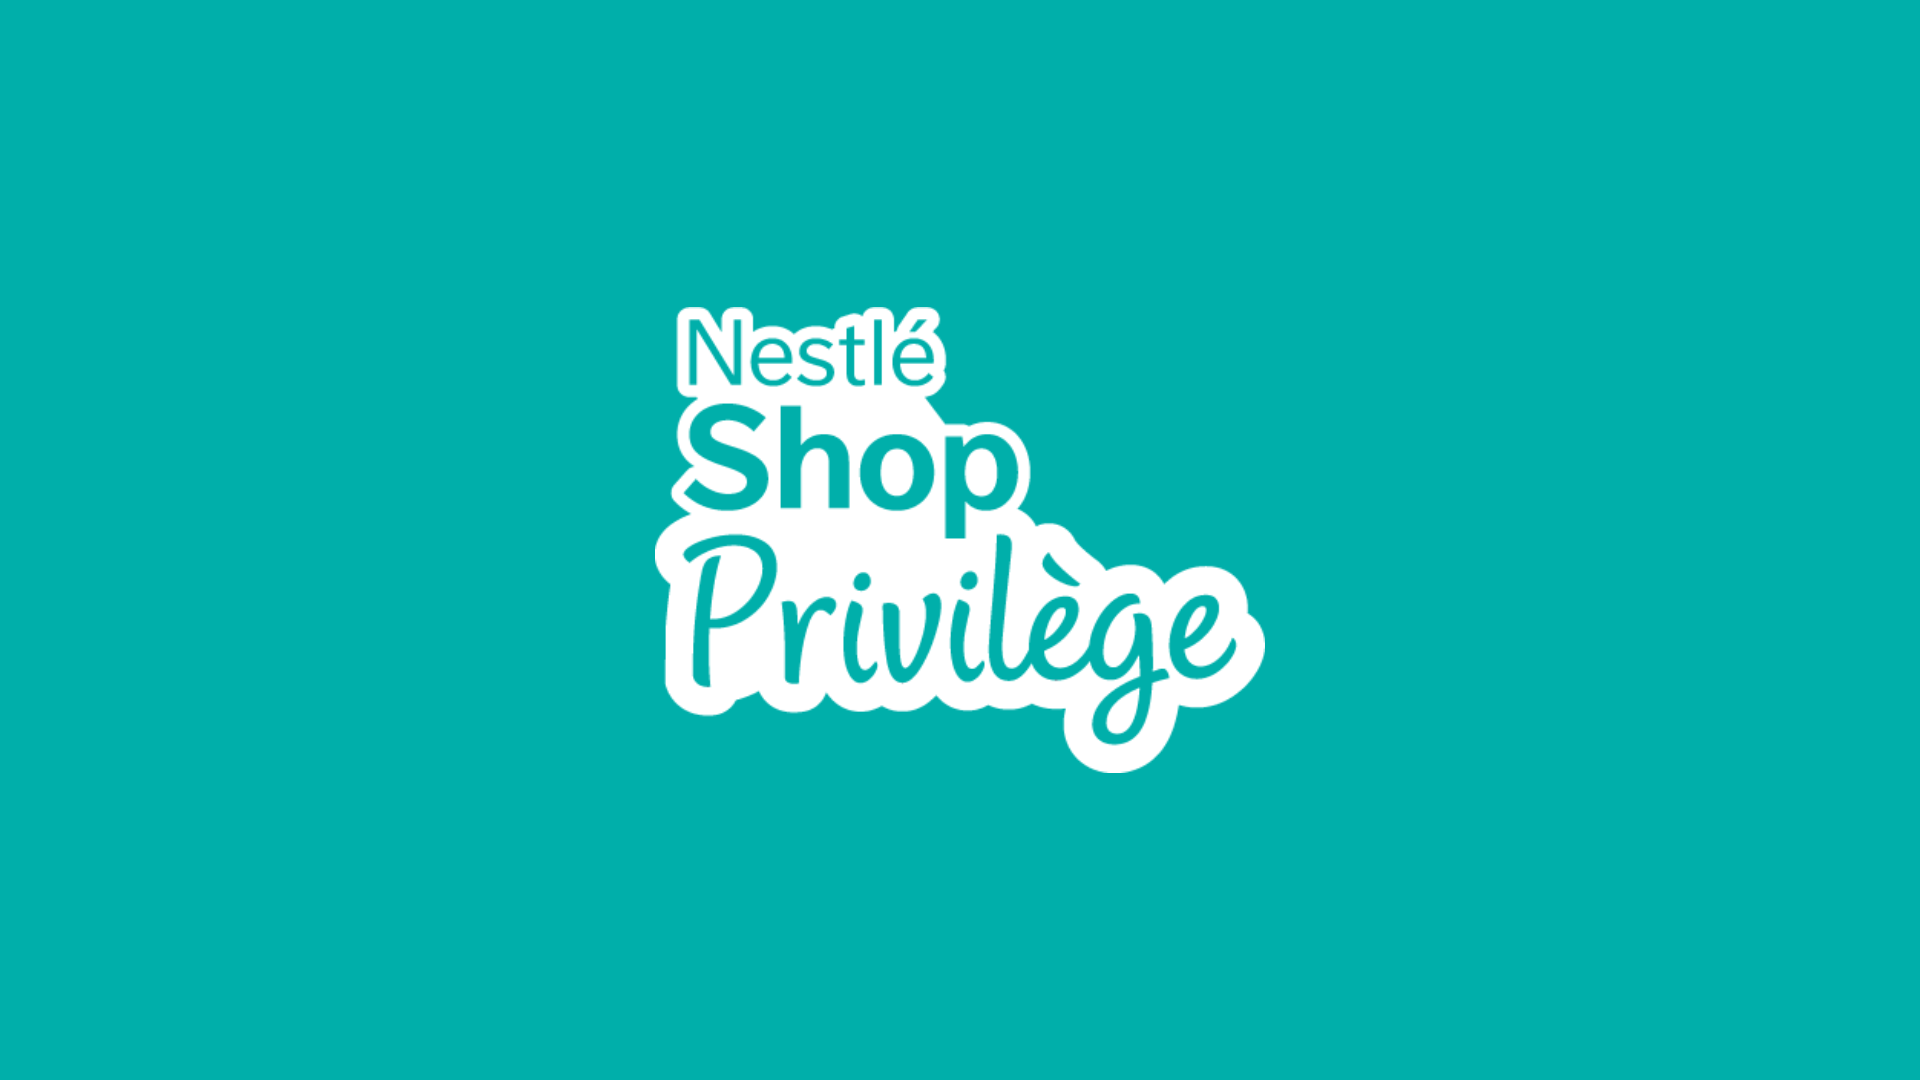 Nestlé Shop Privilege